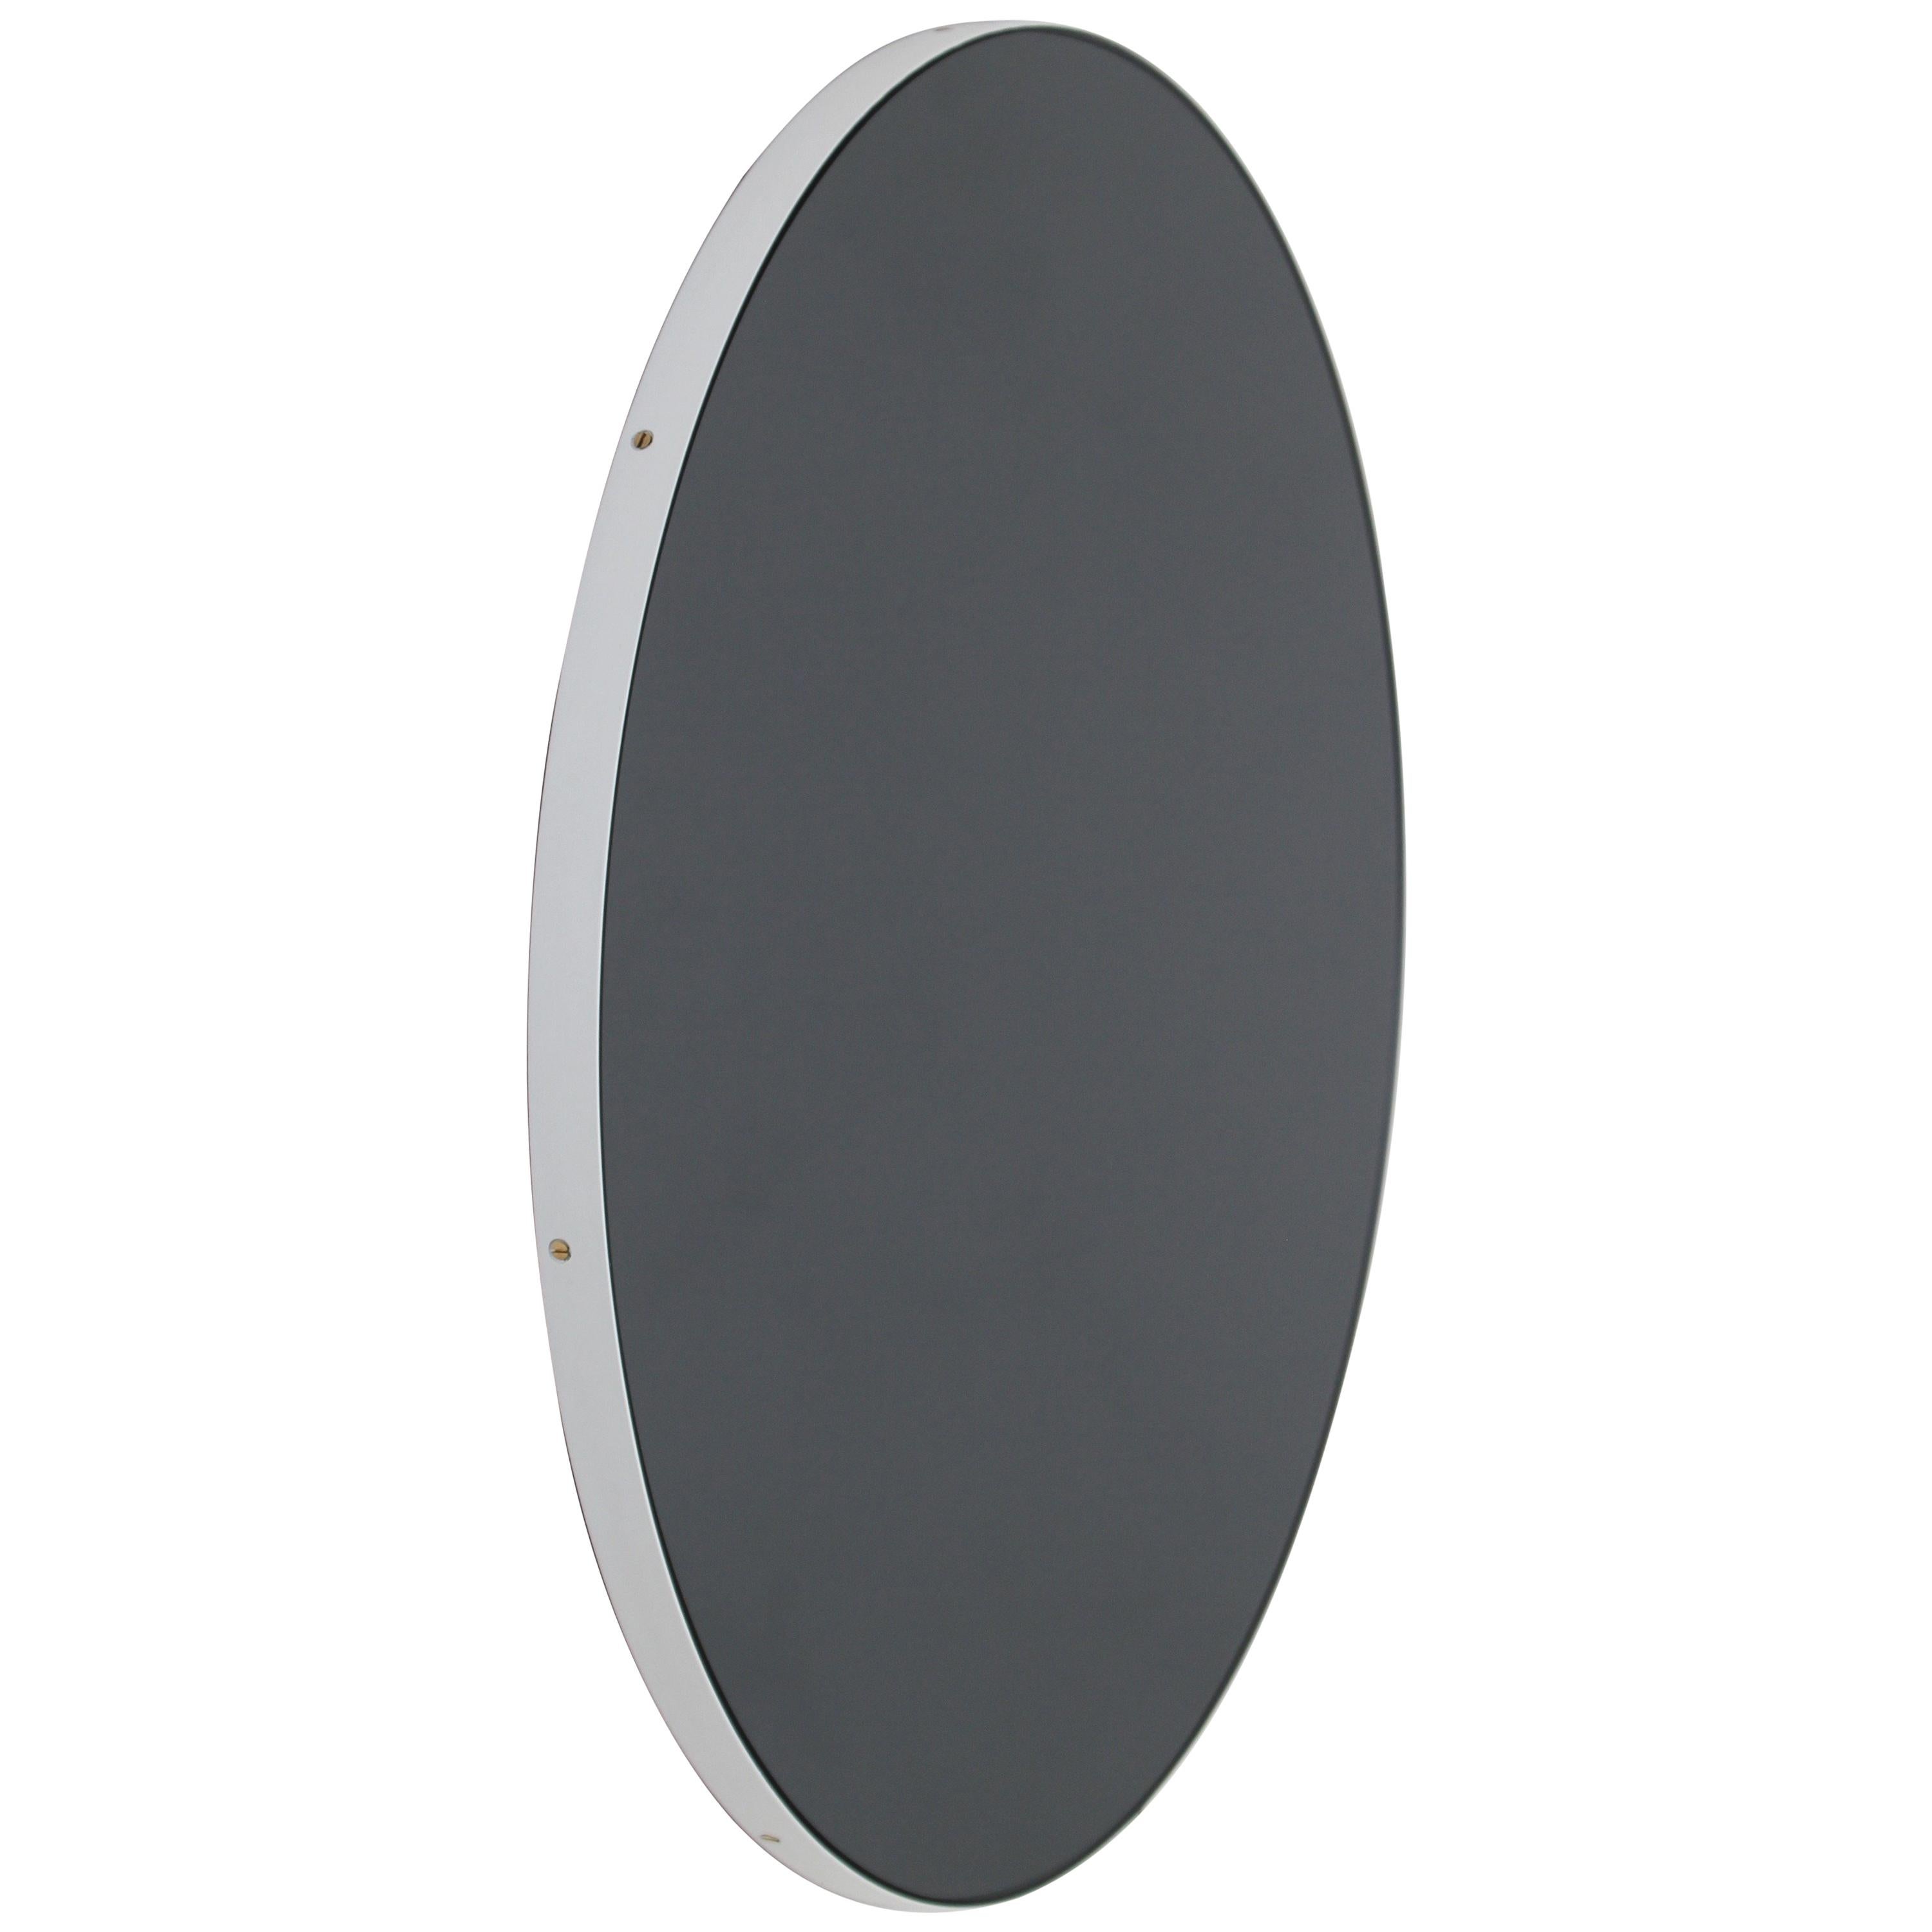 Orbis Black Tinted Circular Minimalist Mirror with White Frame - Small